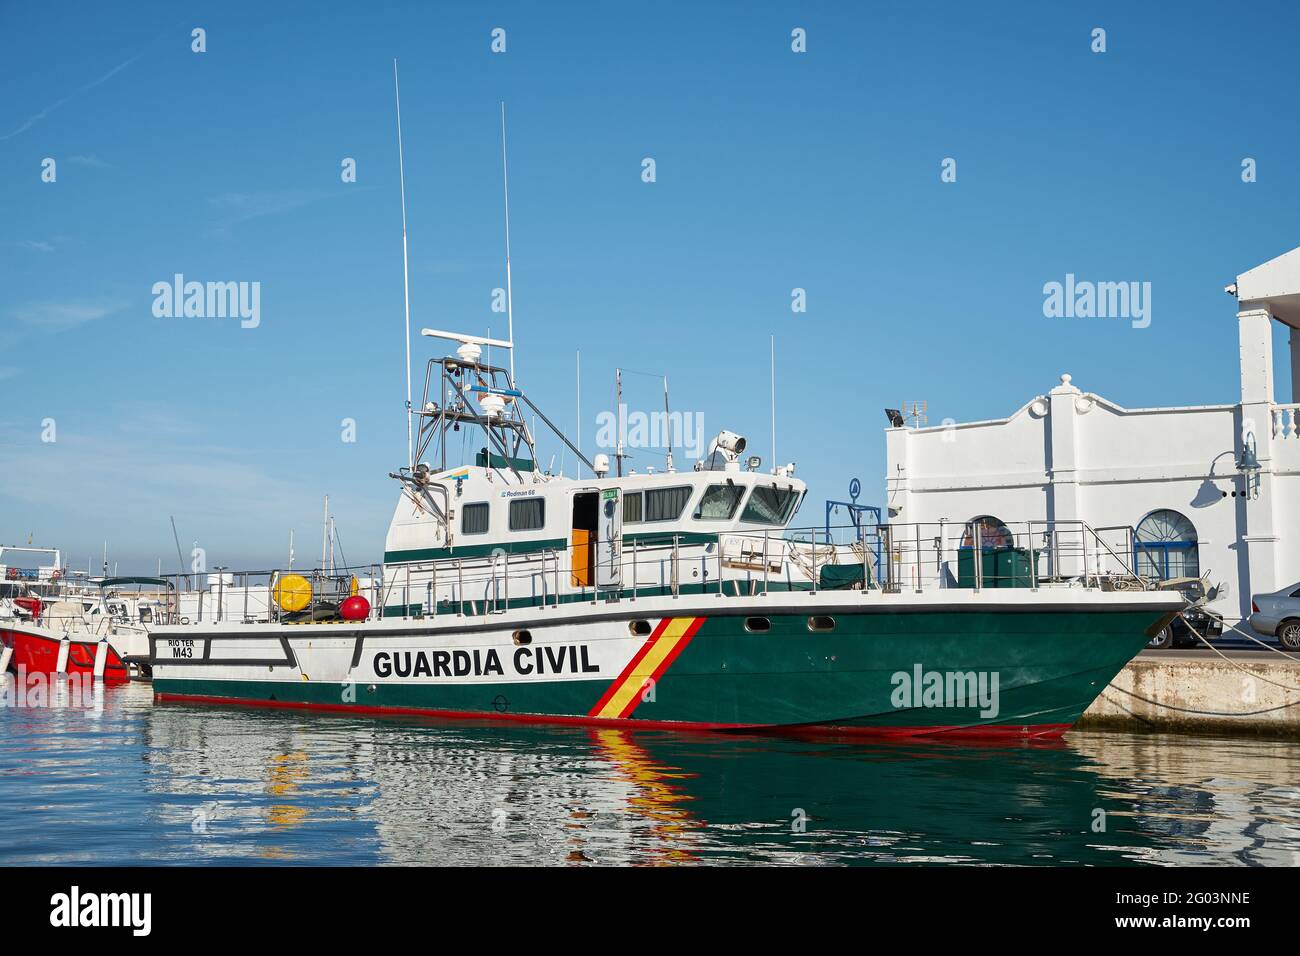 Spanish Guardia Civil boat moored in the port of Benalmadena, Malaga province, Andalusia, Spain. Stock Photo